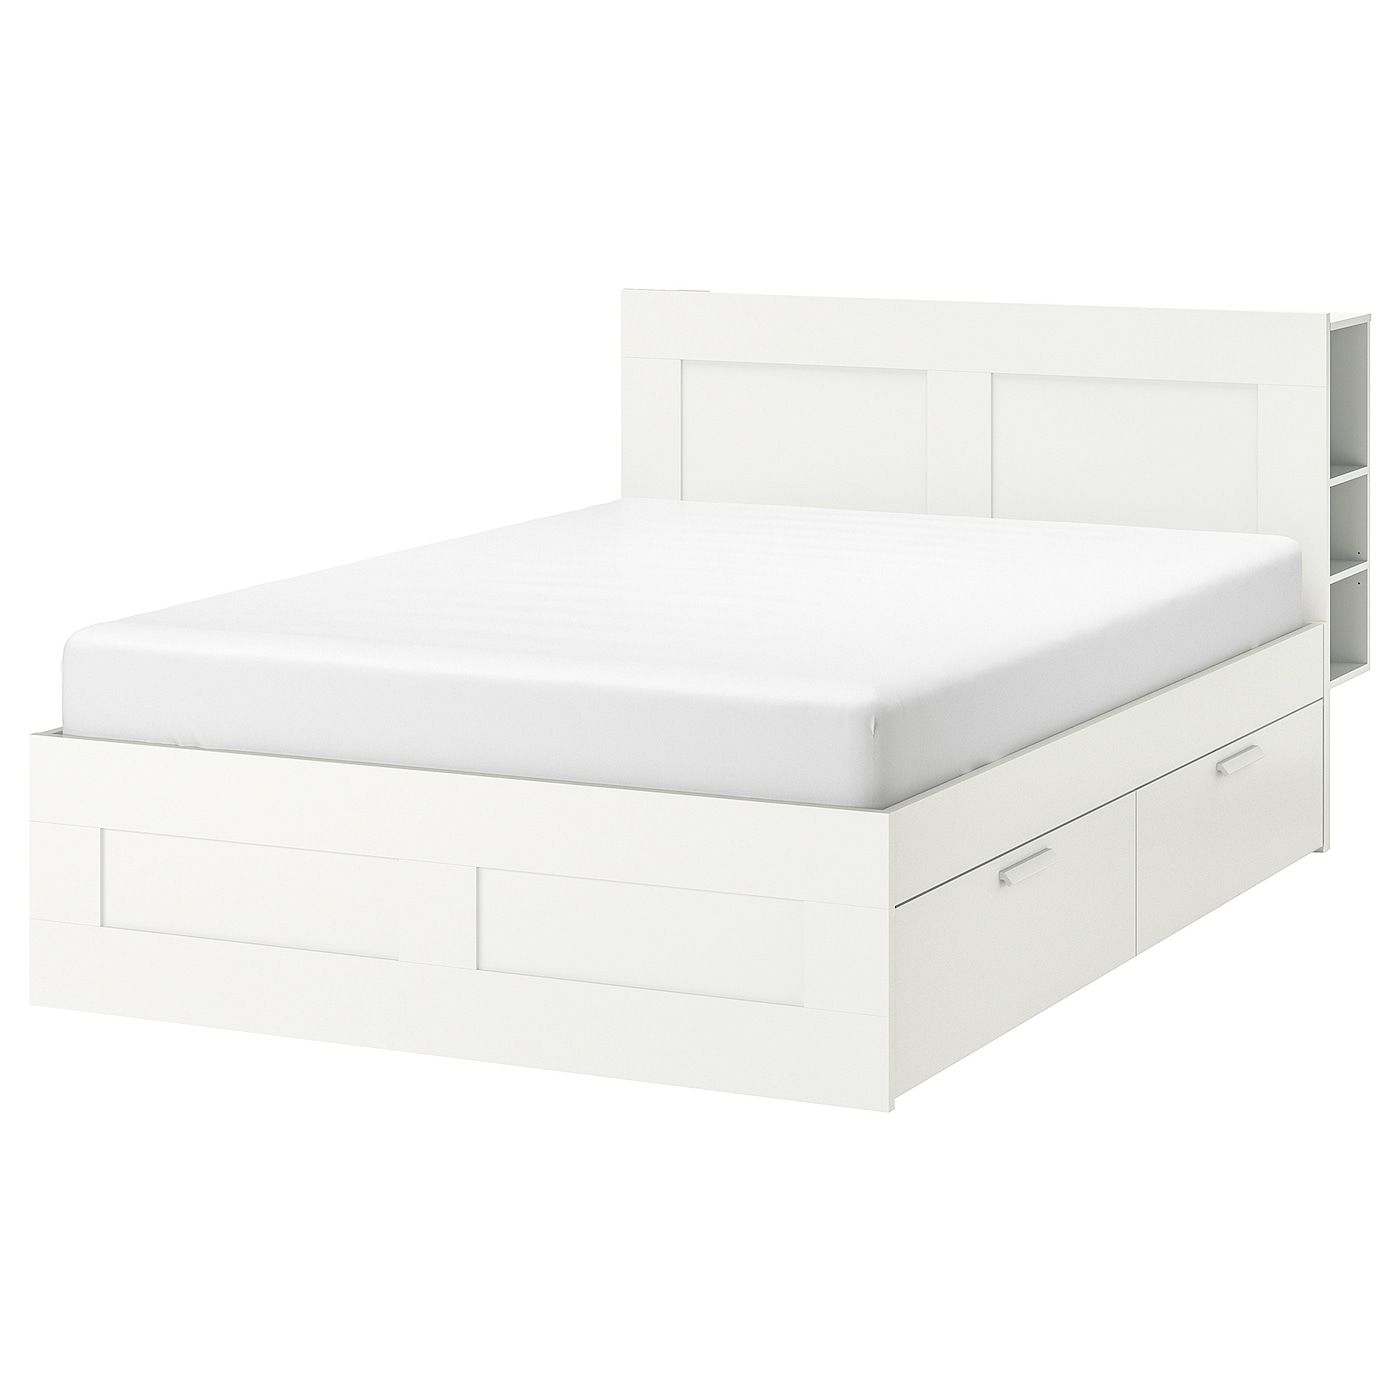 13 Best Bed Frames Of 2021 Top, Ikea Full Bed Frame No Headboard